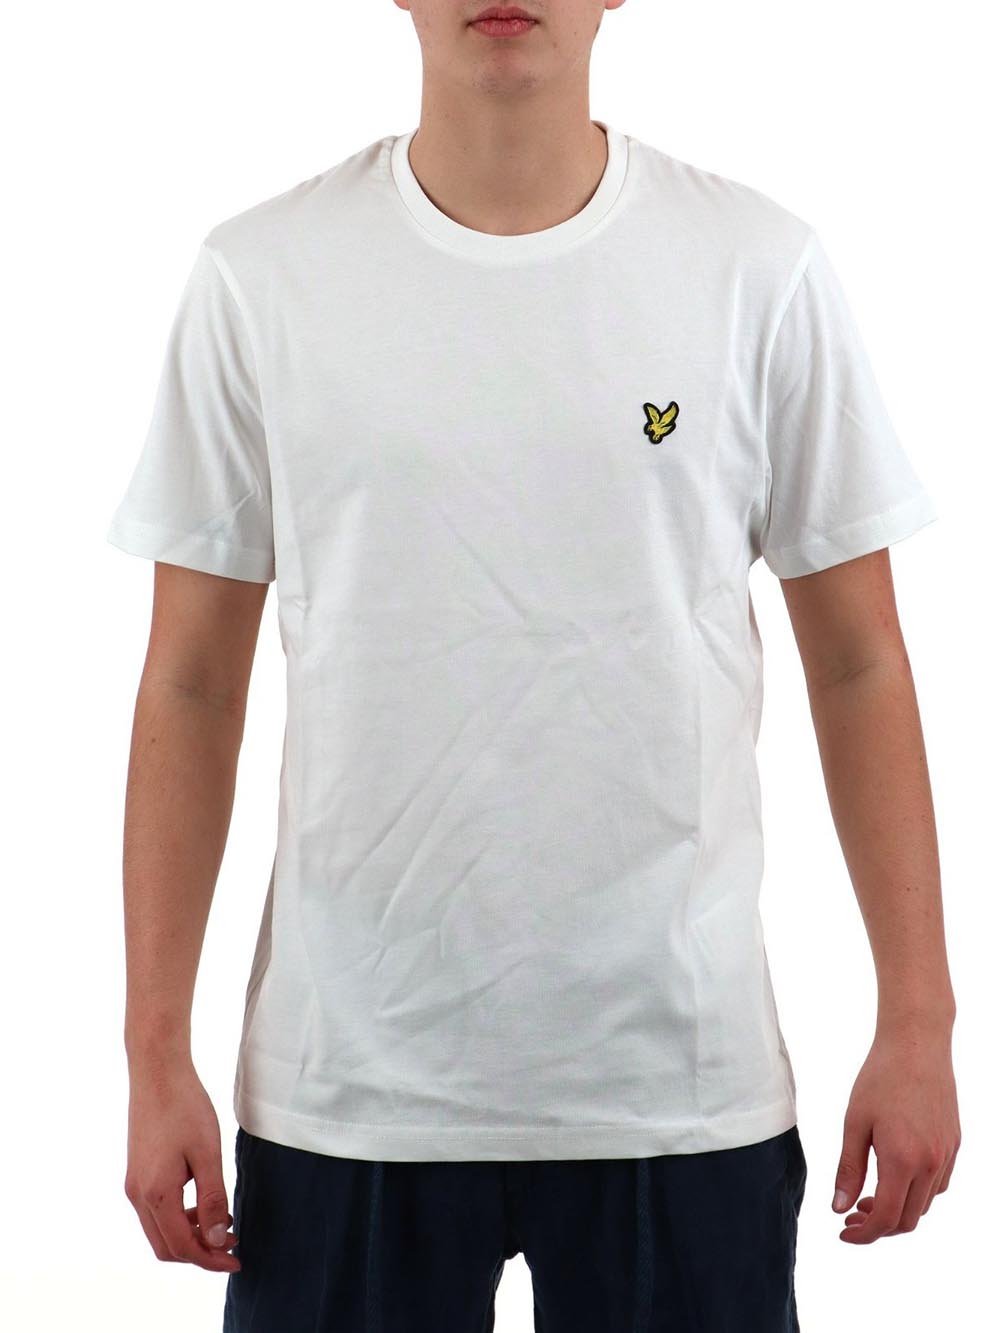 Lyle & Scott T-shirt Uomo Ts400gr1 Bianco